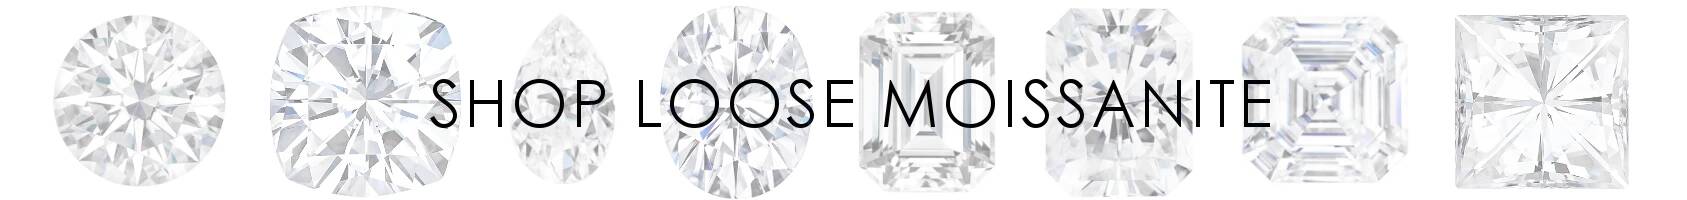 Shop Loose Moissanite, Moissanite and Diamond Size Chart, Moissanite vs Diamond